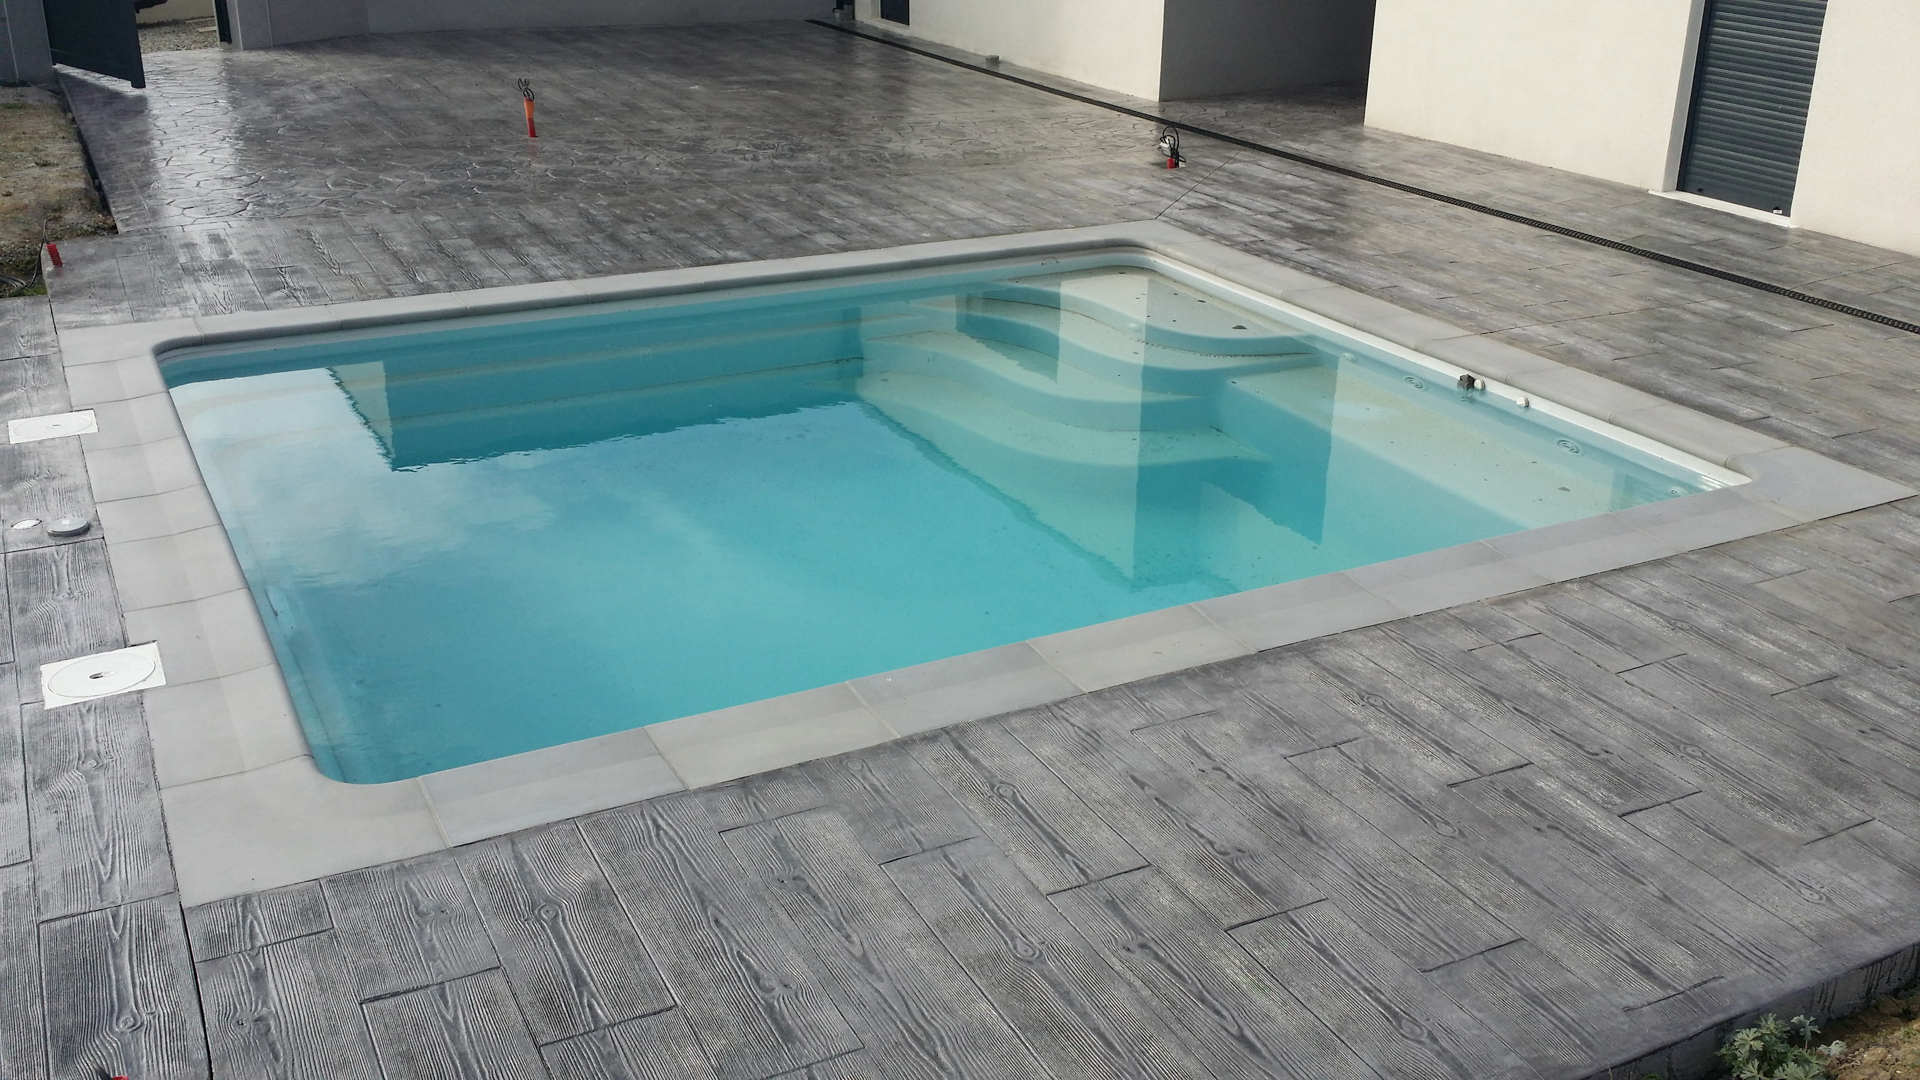  piscina con hormigón impreso imitación madera